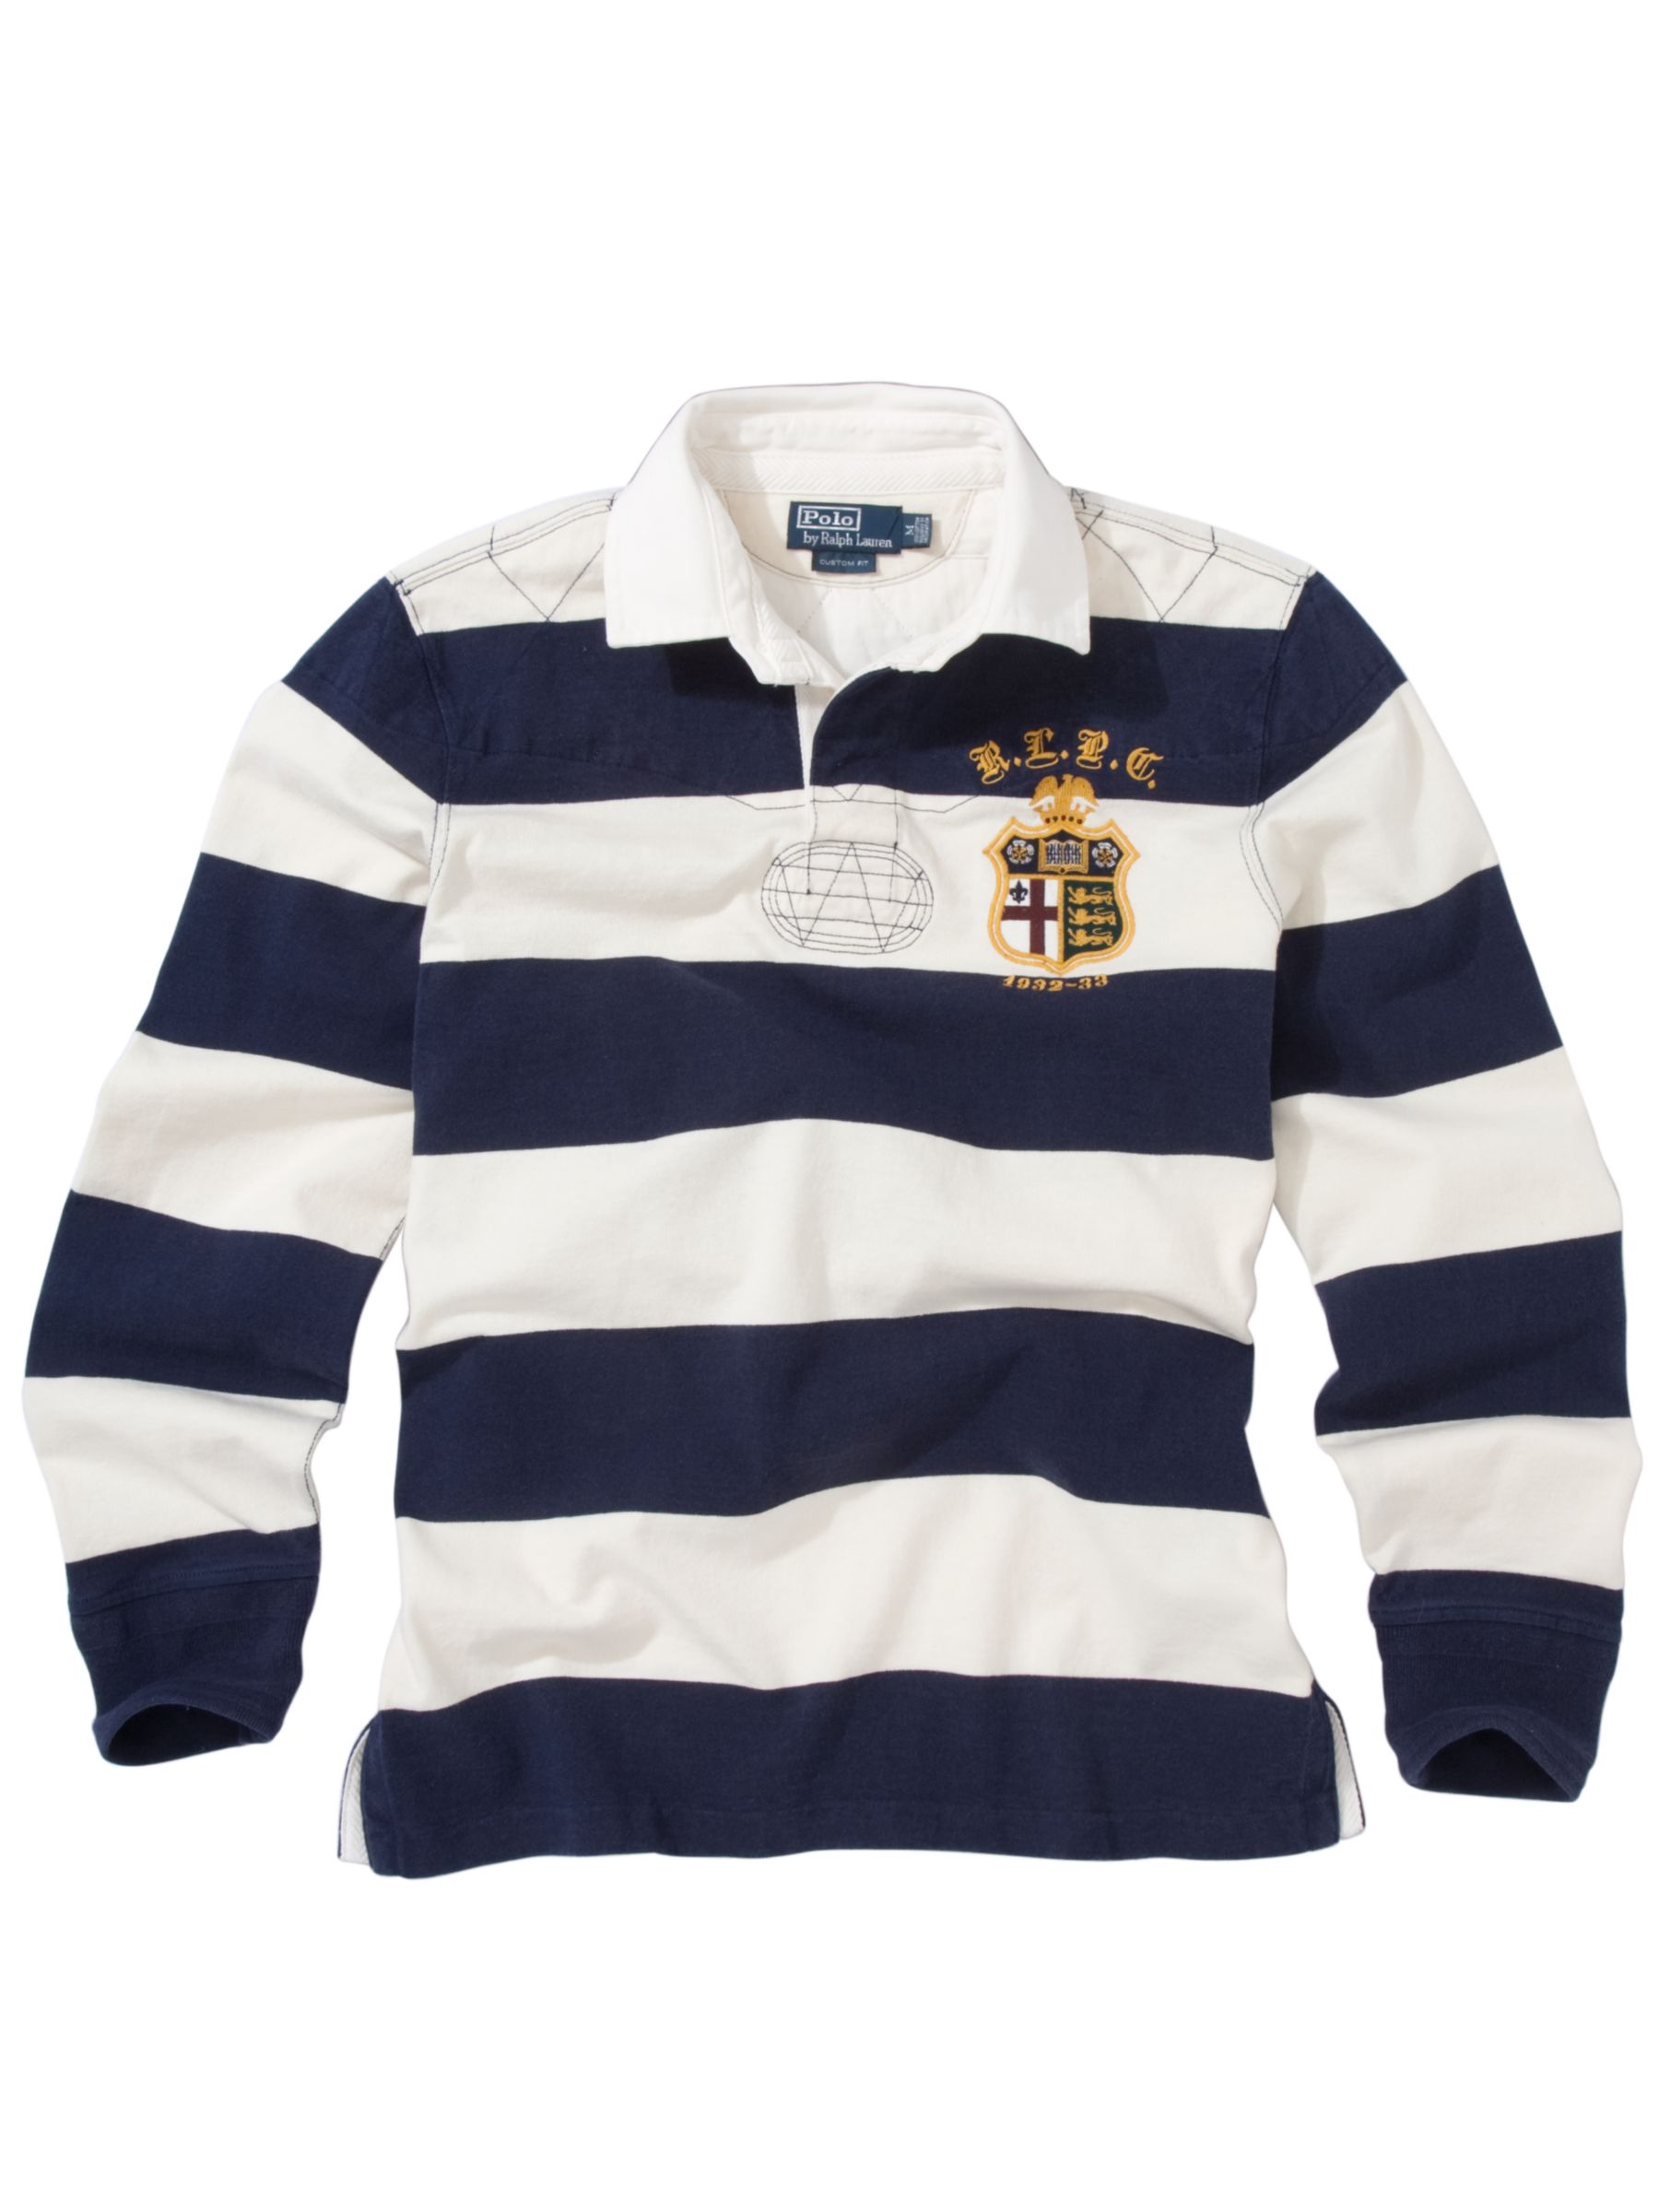 Polo Ralph Lauren Classic Rugby Shirt, Navy/cream